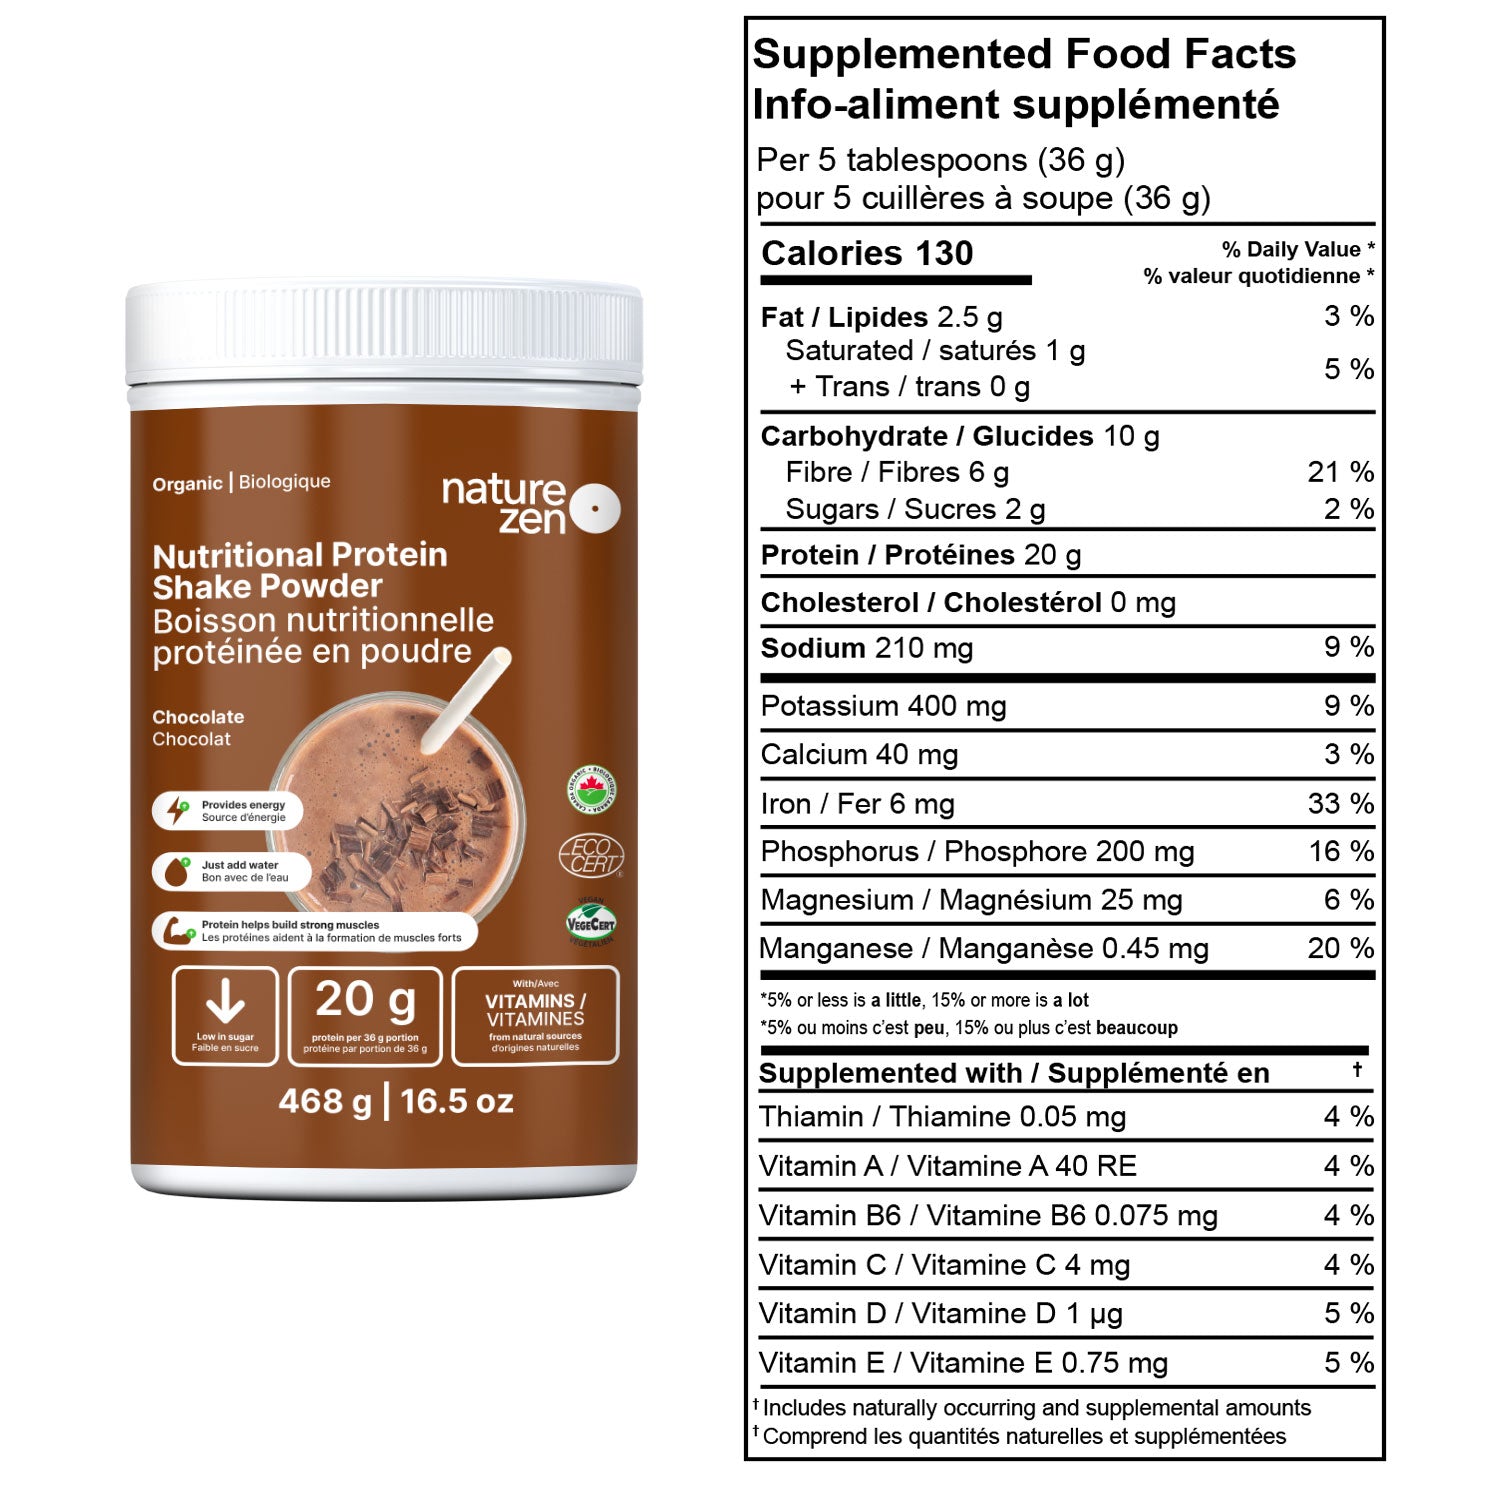 Organic Vegan Nutritional Protein Shake Powder | Nature Zen Essentials - Chocolate